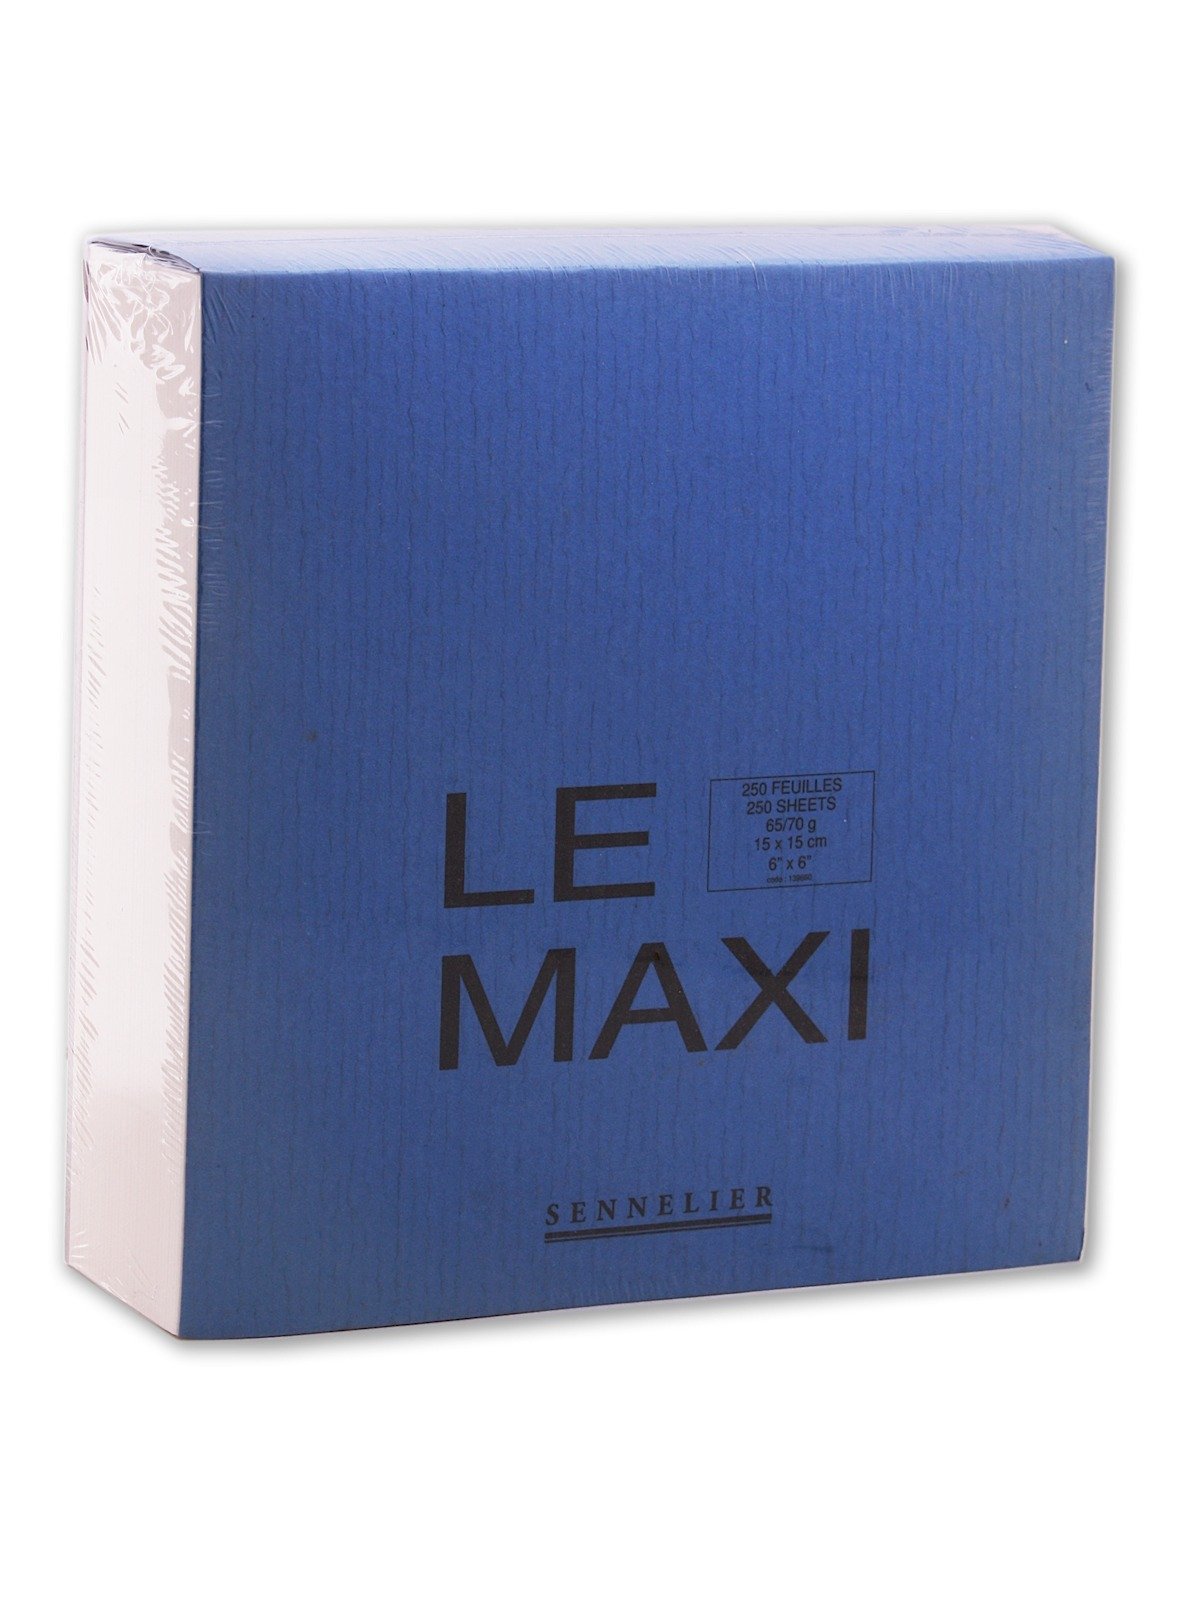 Sennelier - Le Maxi Block Drawing Pads